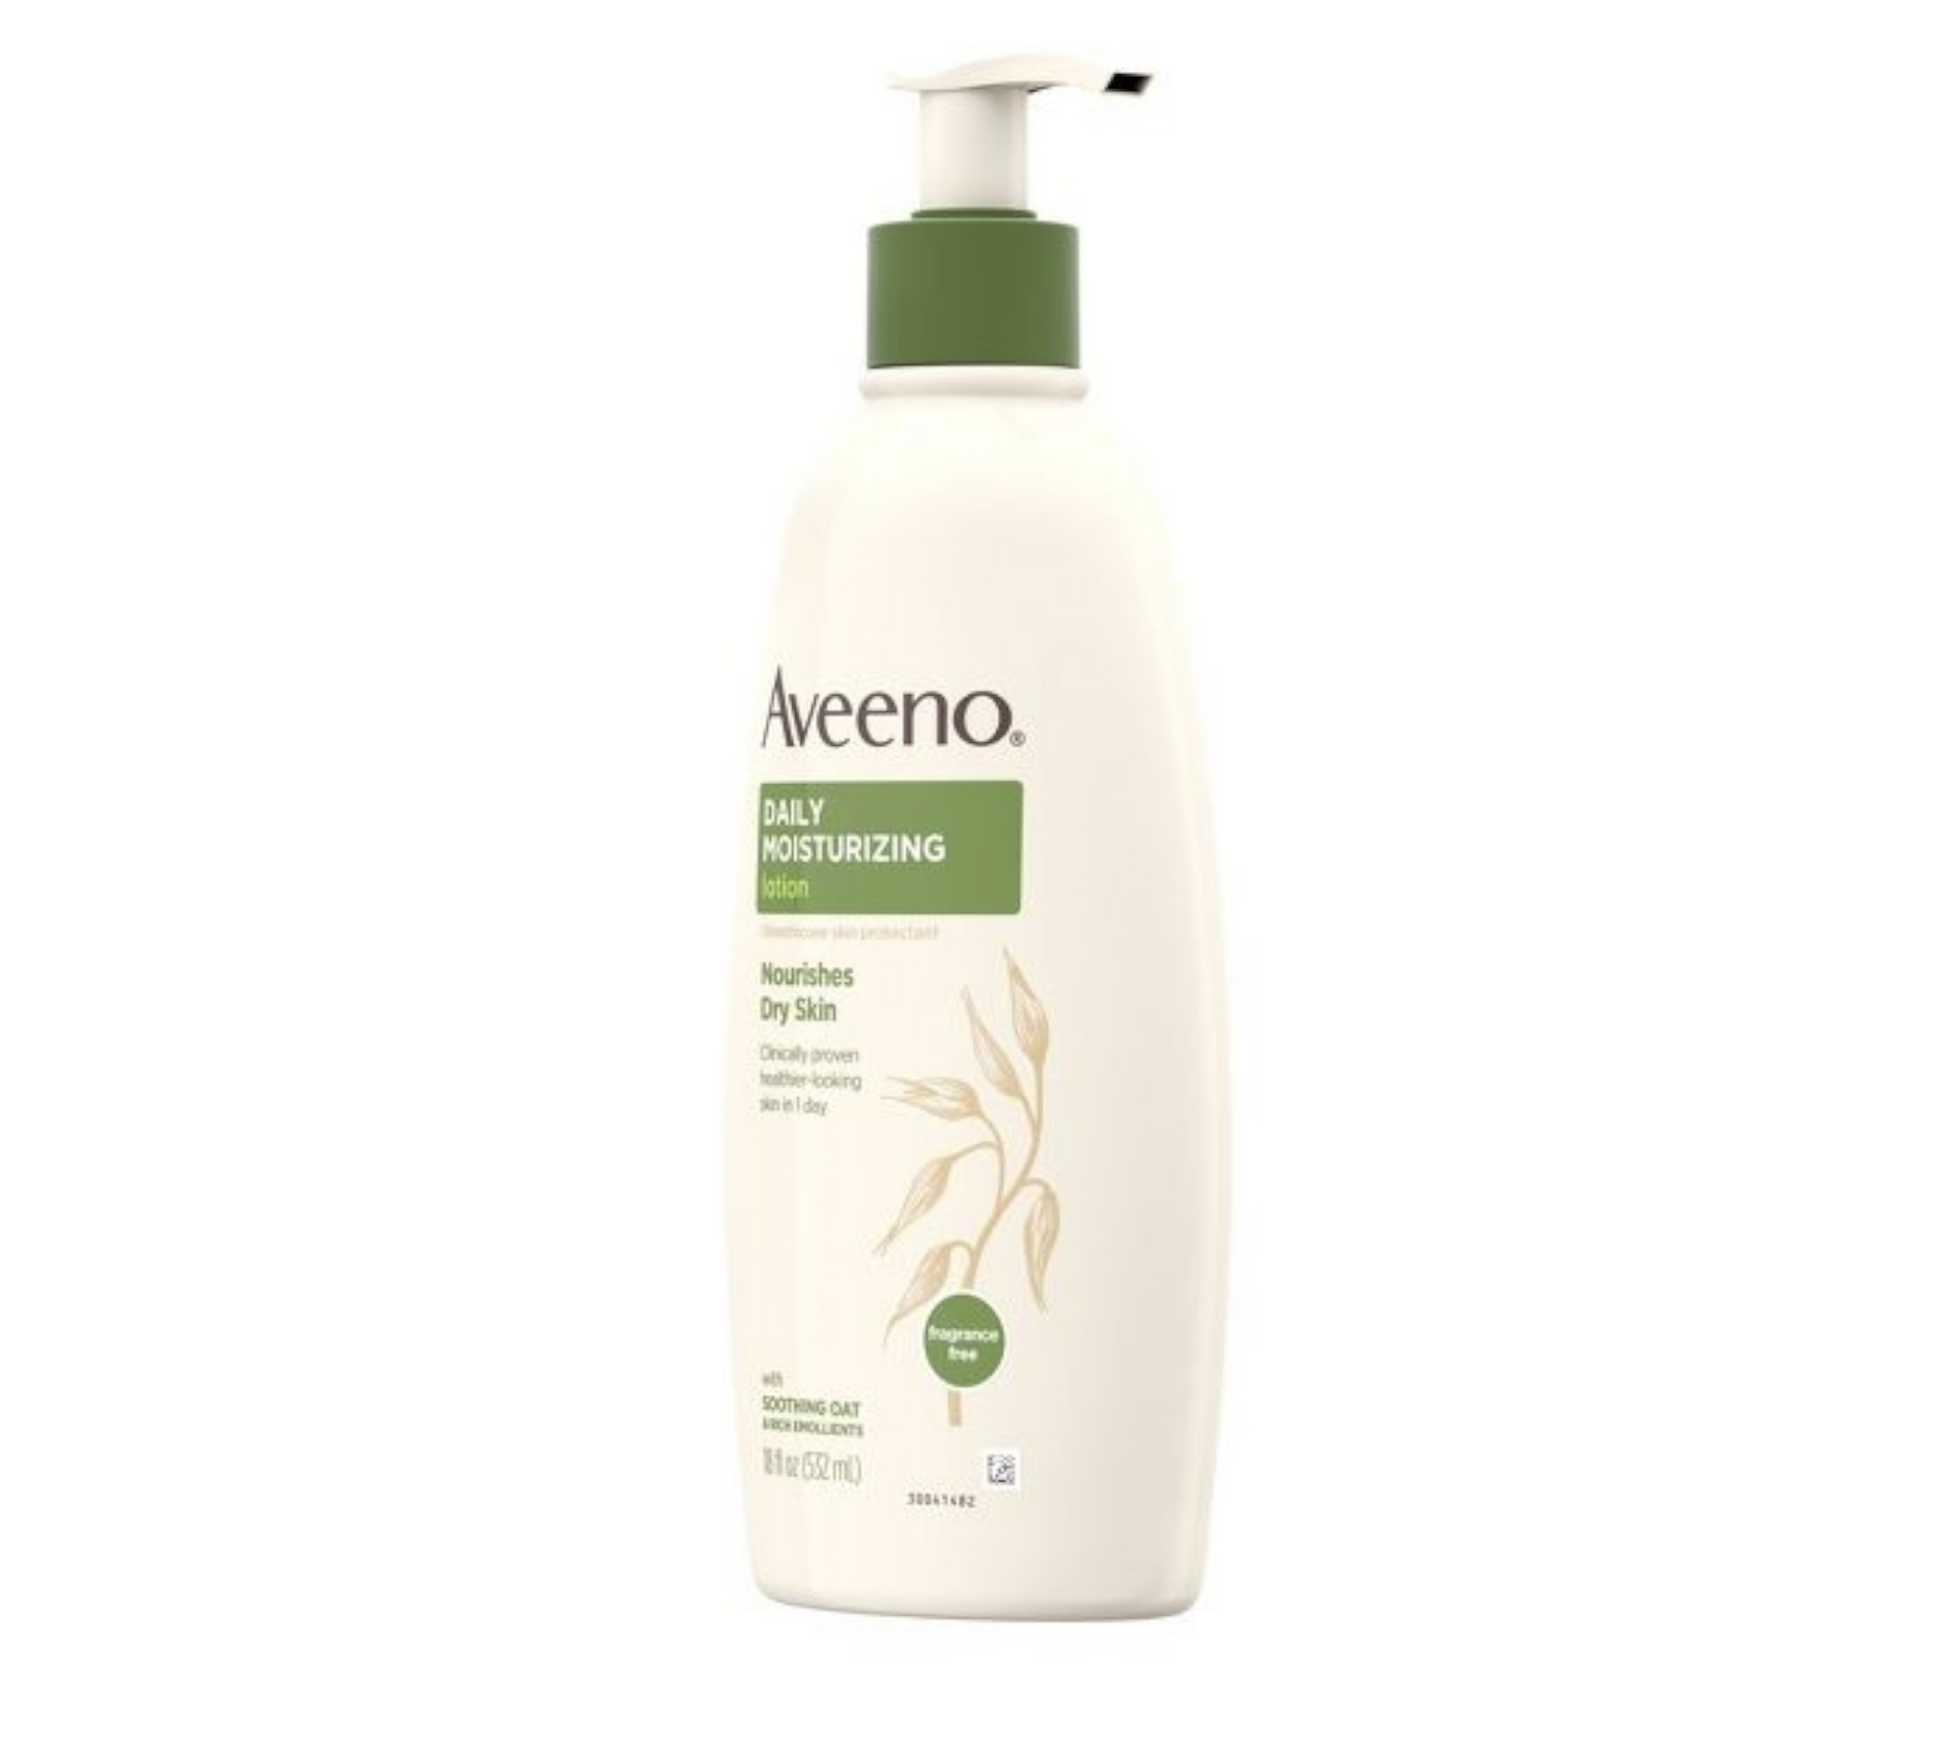 Aveeno Cupid Beauty Supplies Body Lotion Aveeno Daily Moisturizing Lotion For Dry Skin